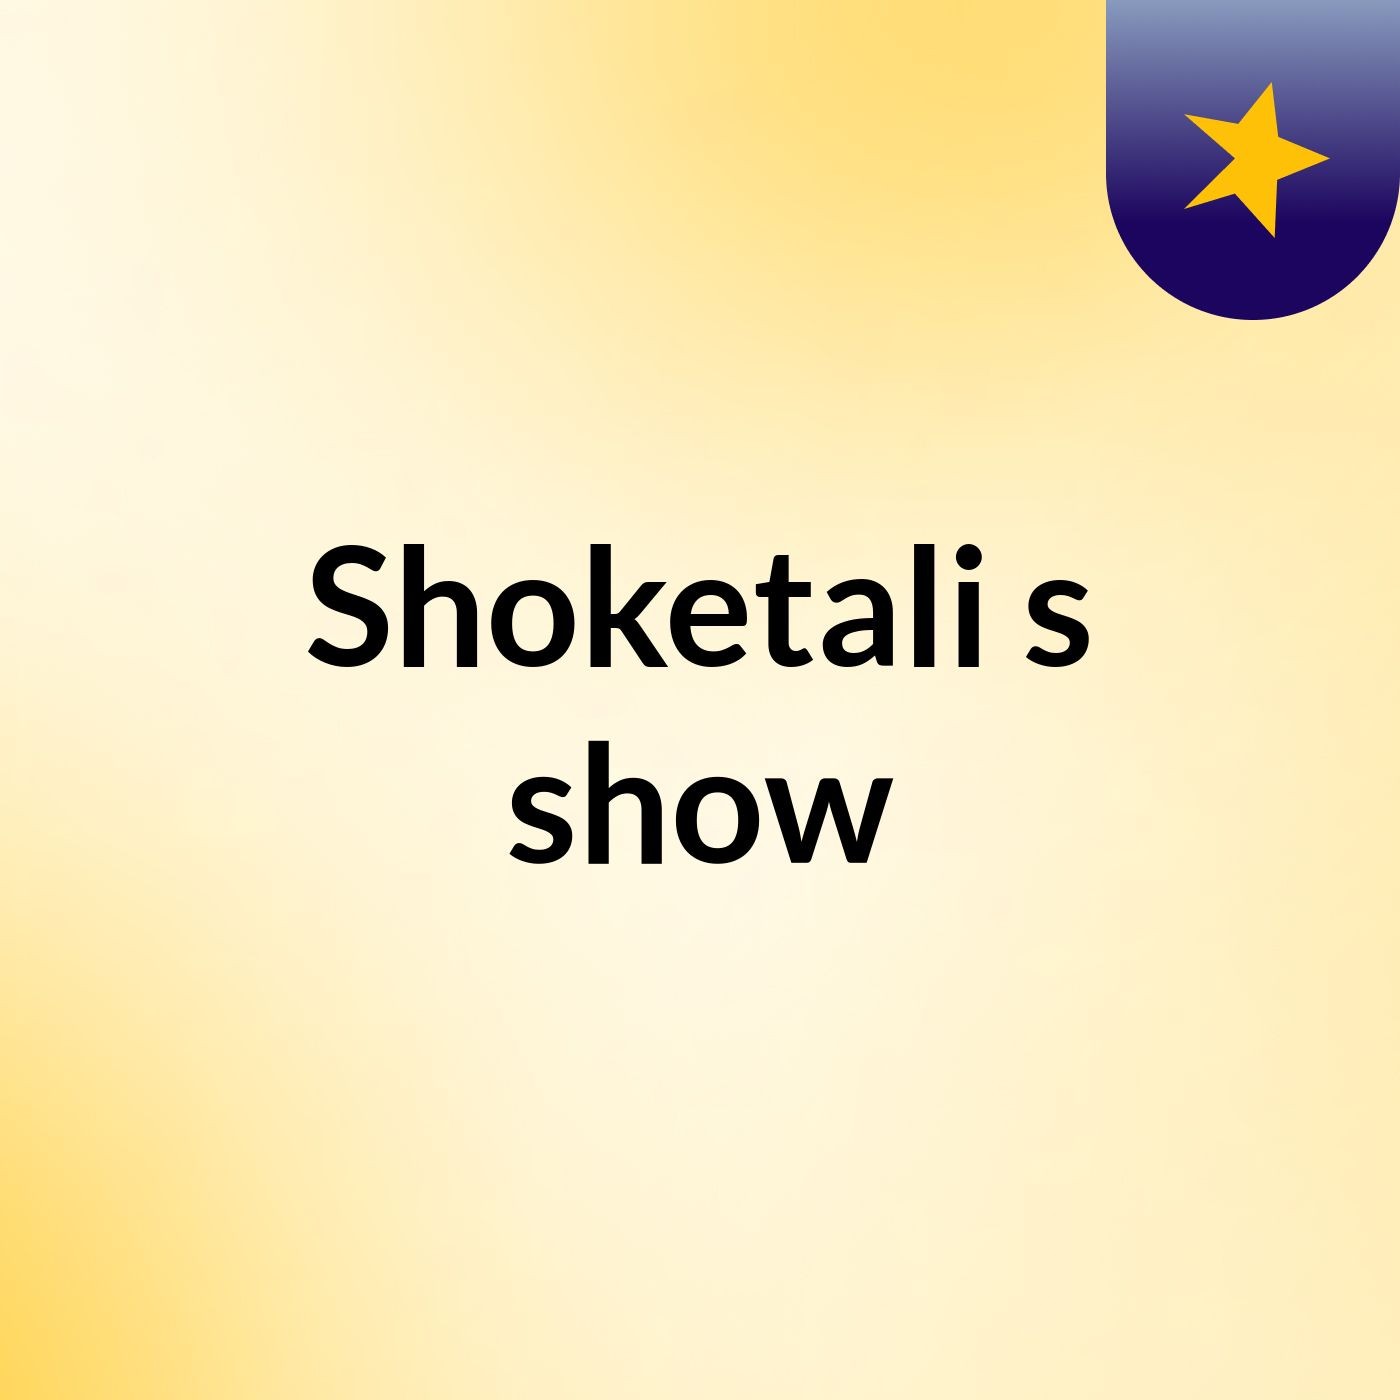 Shoketali's show